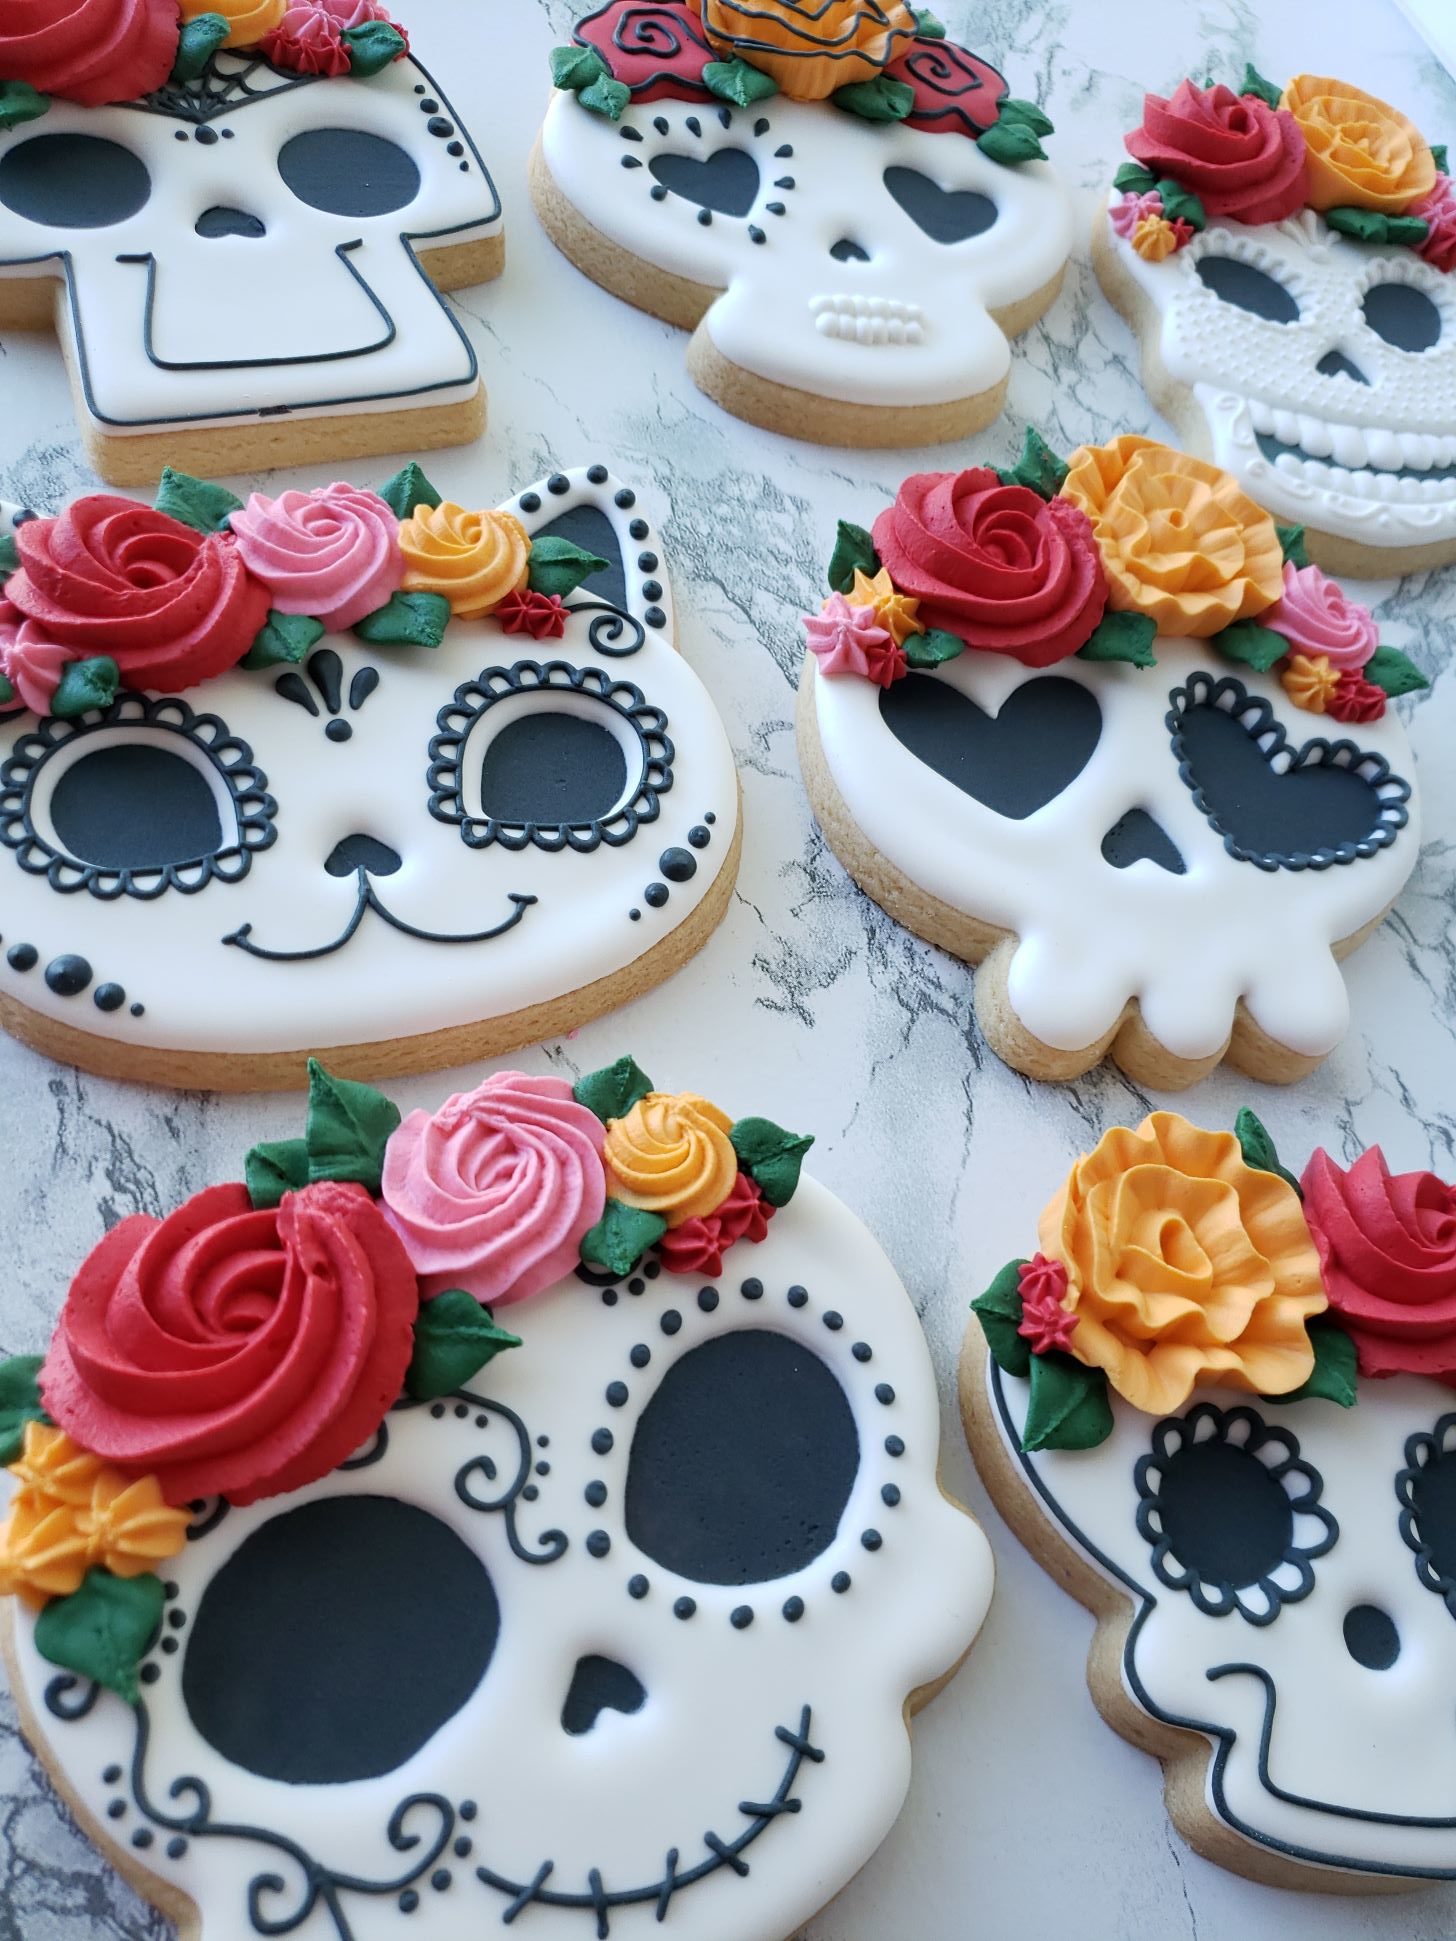 Beautiful Sugar Skull Cake with Cupcake Flowers